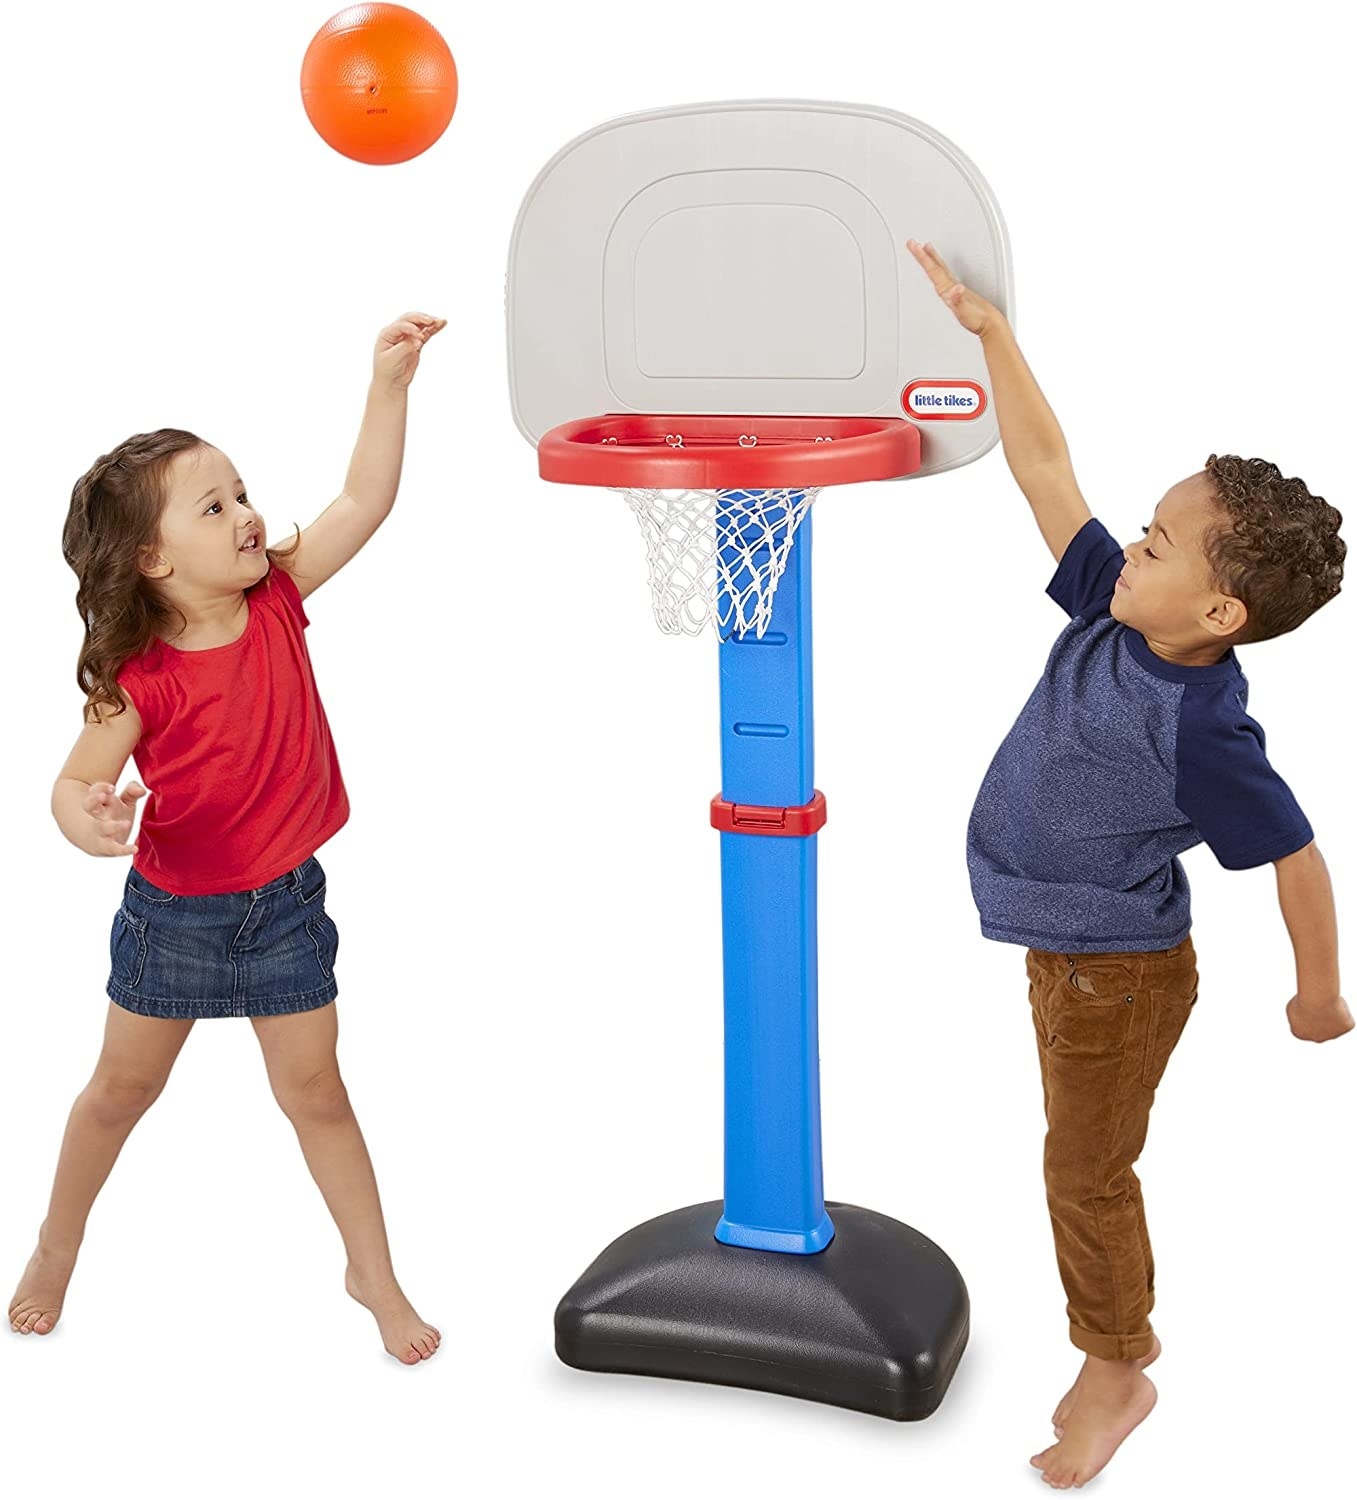 Two kids playing basketball